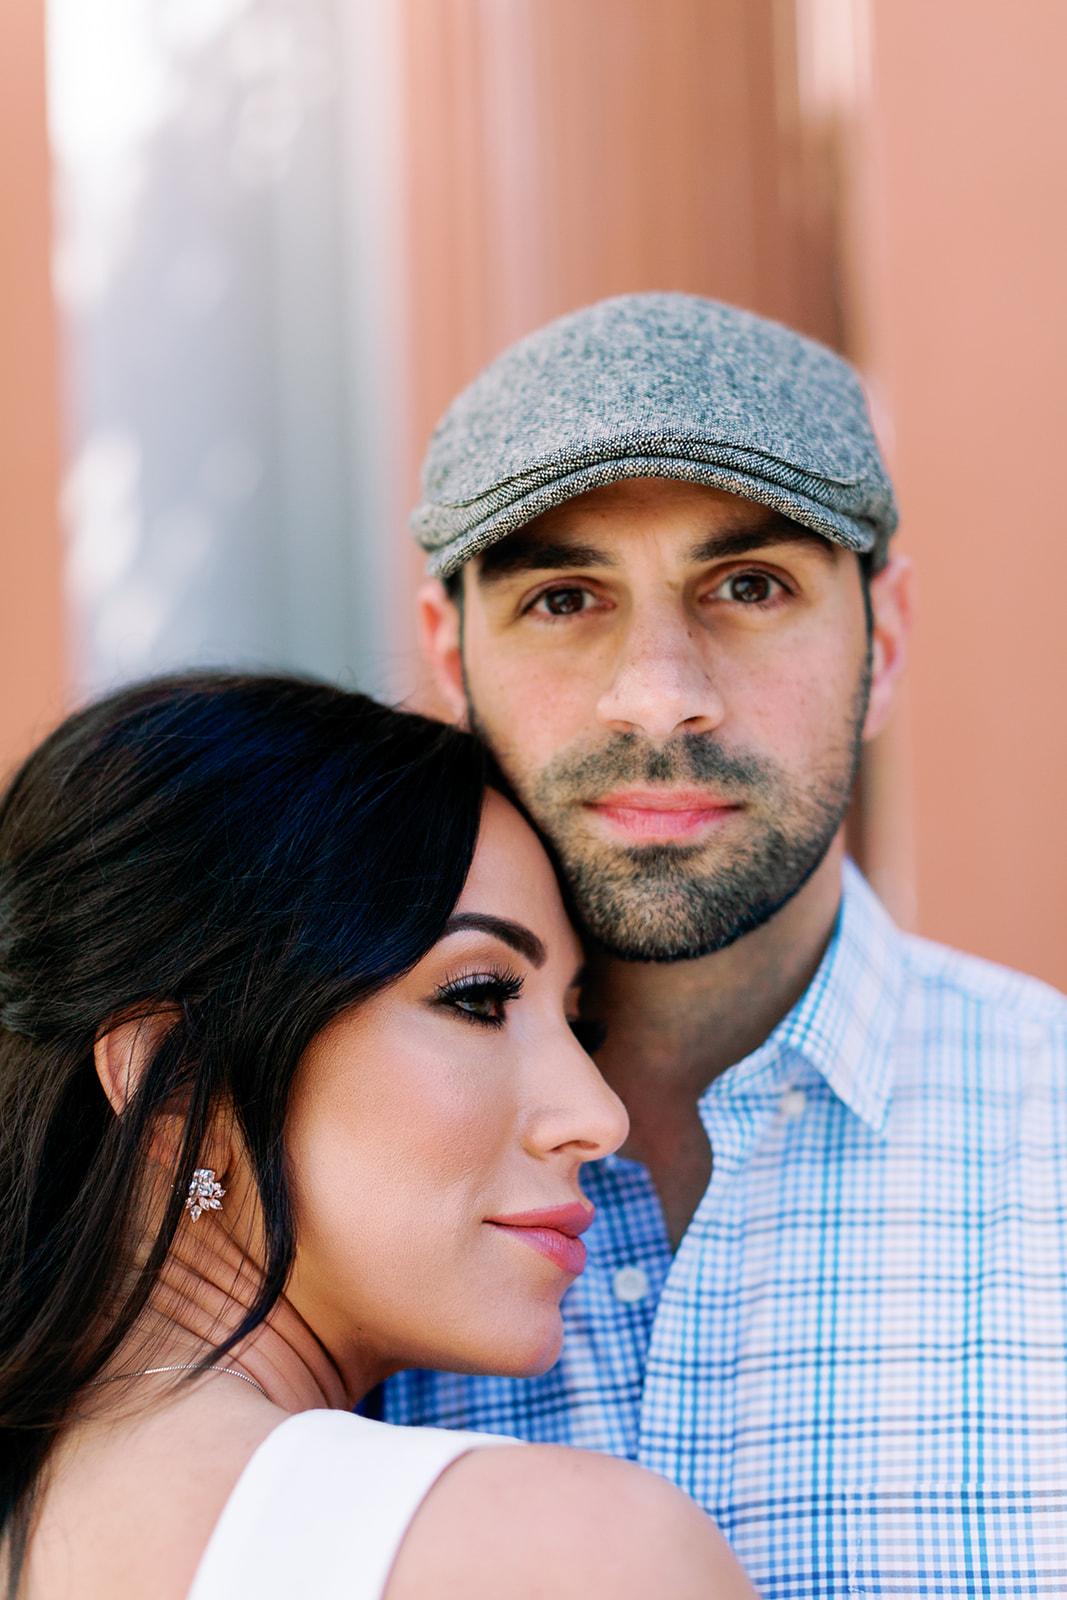 The Wedding Website of Diana DiStefano and Dante Cortello